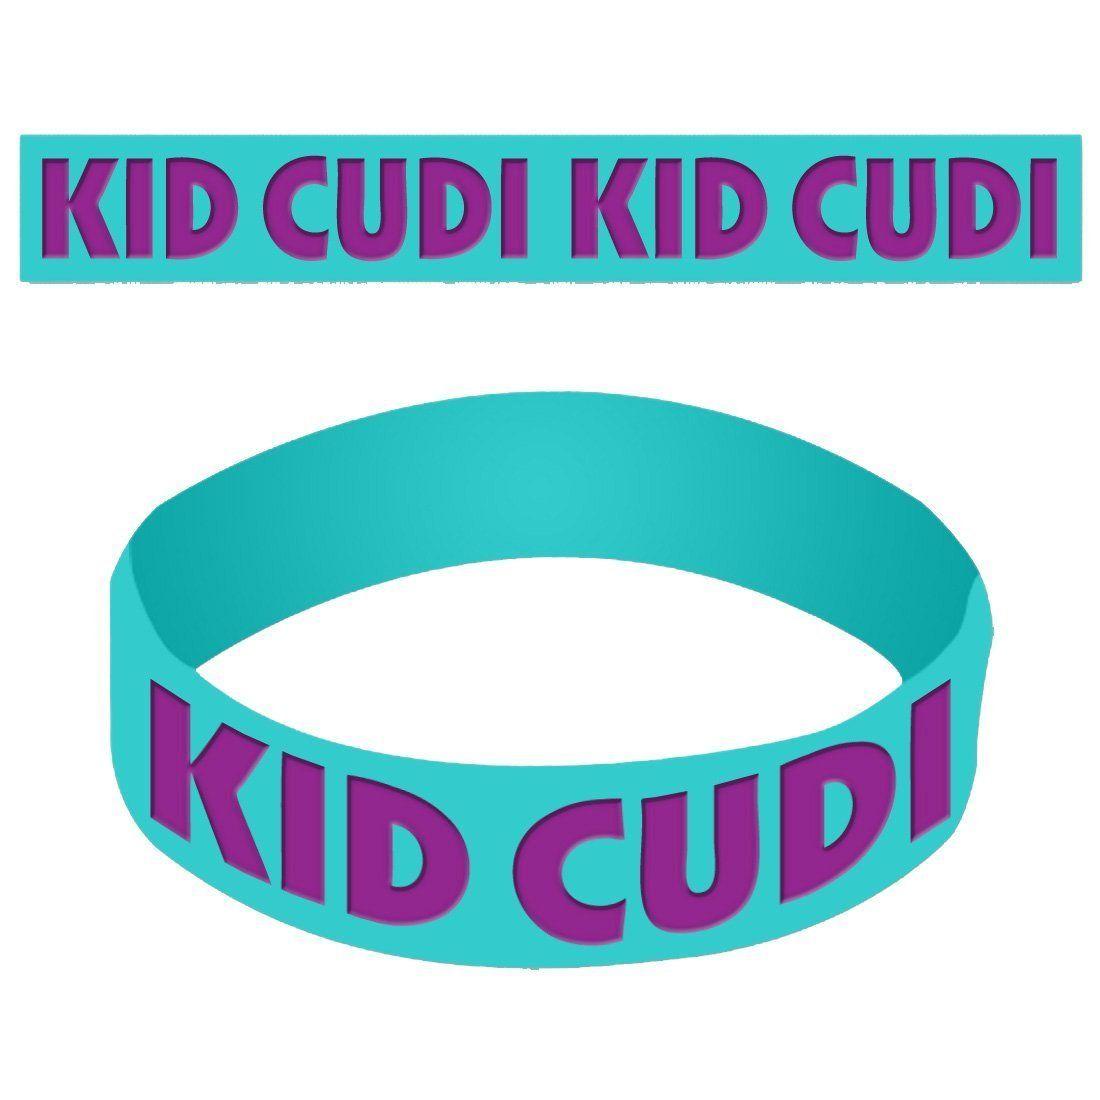 Cudi Logo - Kid Cudi Logo - Unisex Turquoise Rubber Bracelet - High Gear Inc.